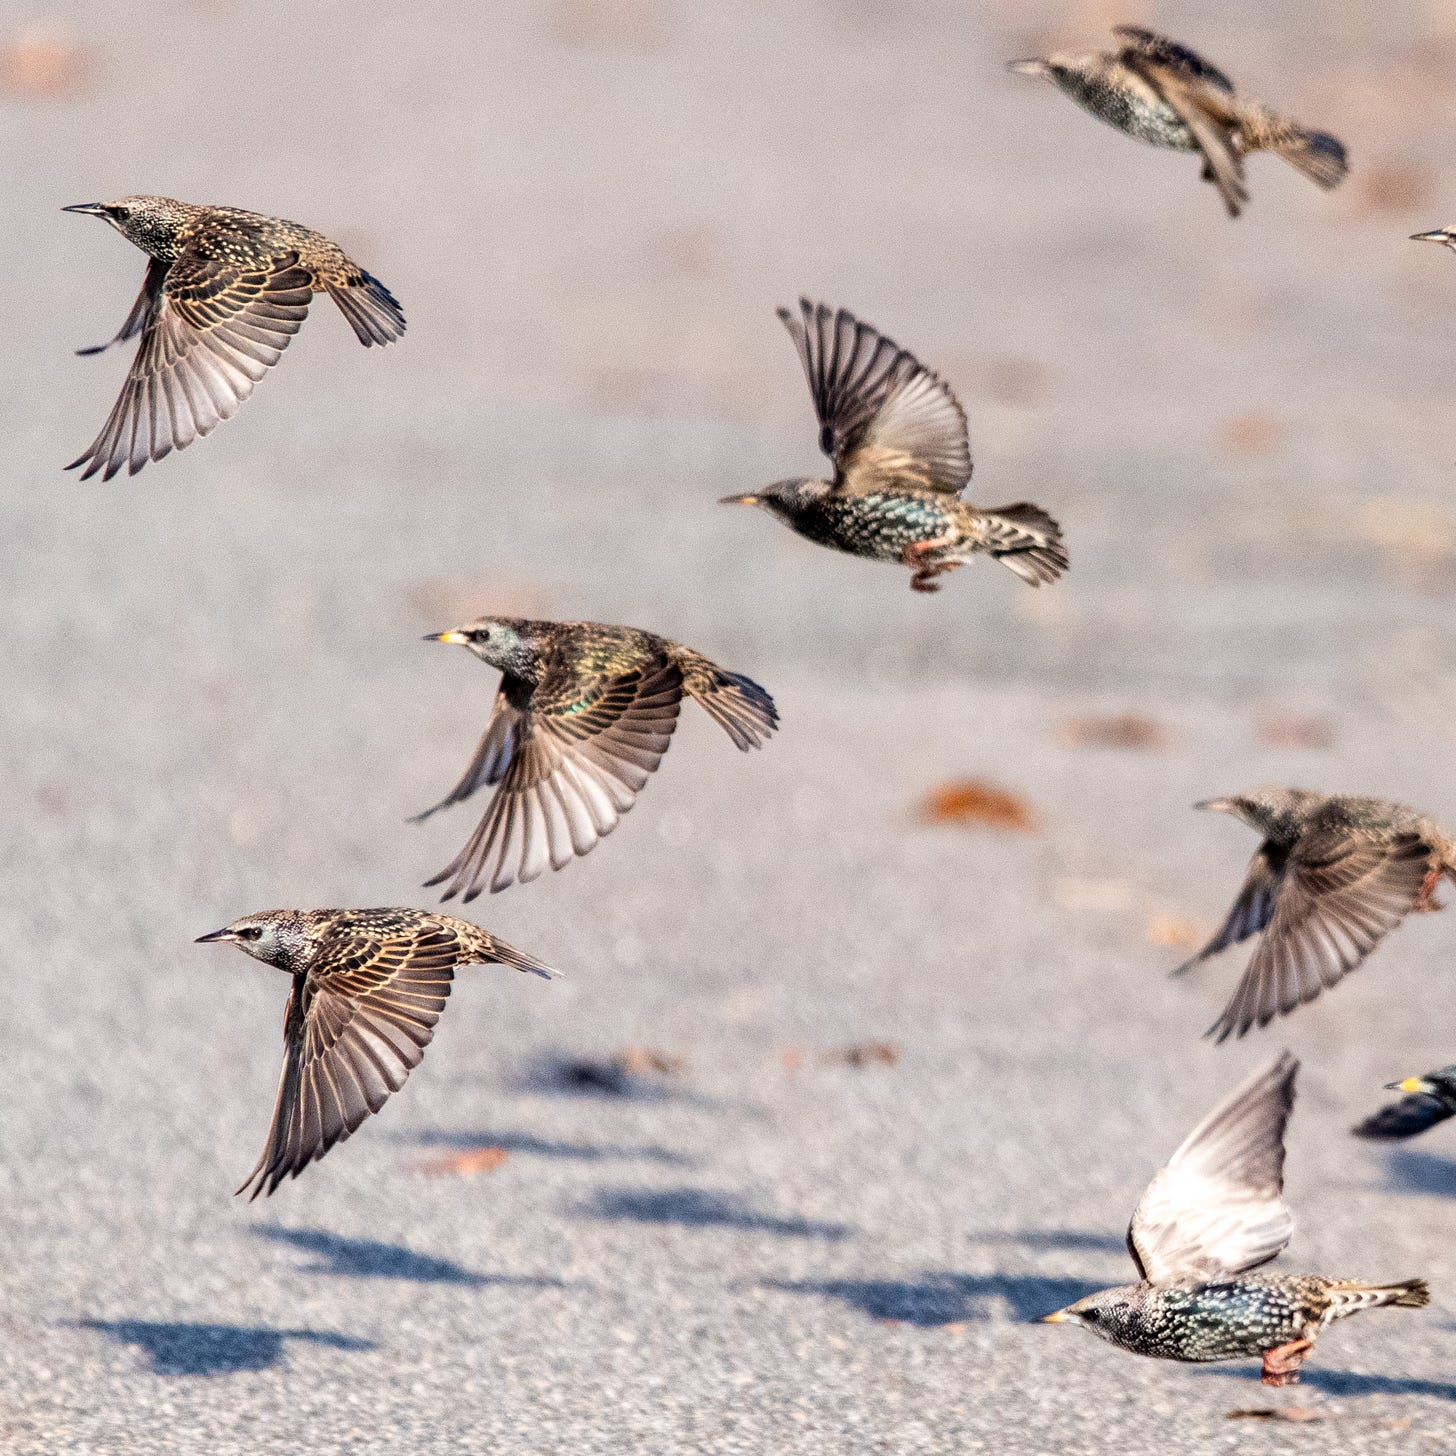 Half a dozen European starlings in flight, over a sidewalk, wings flapping in synchrony